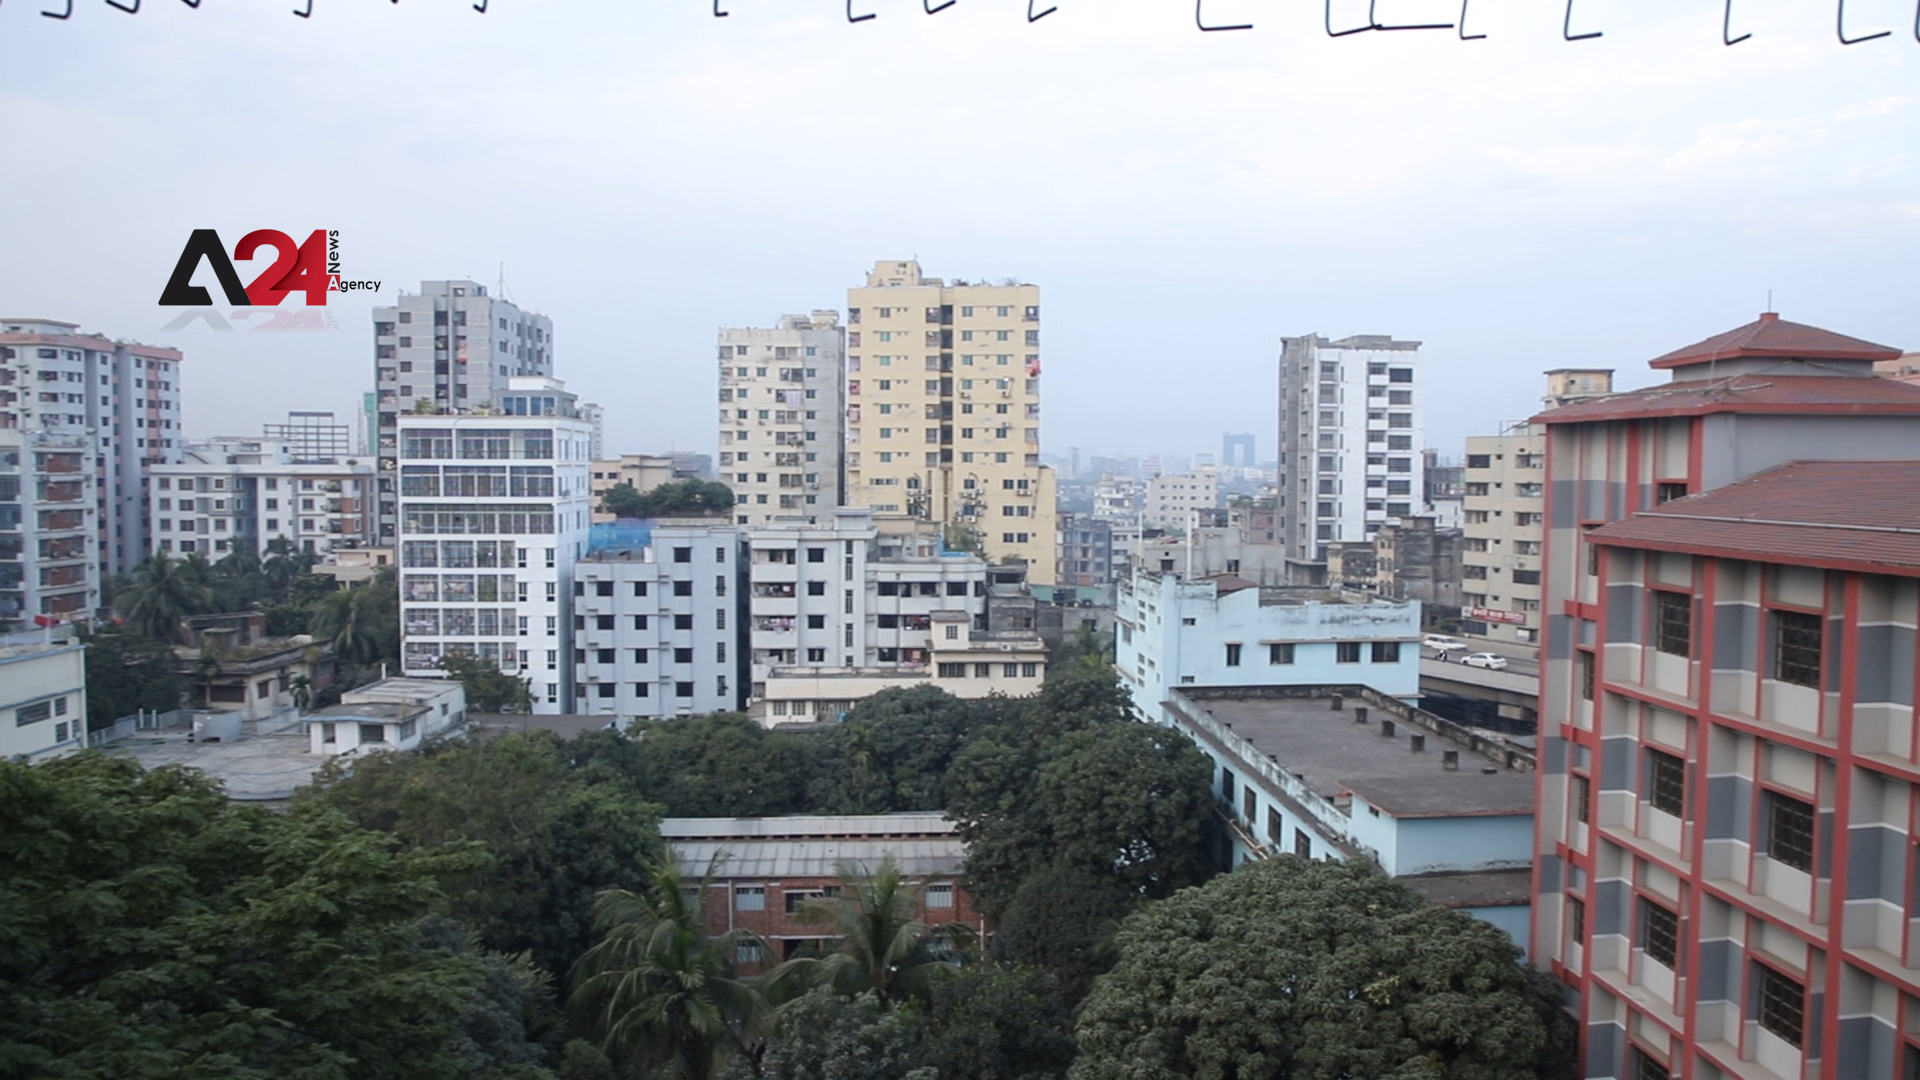 Bangladesh - Real Estate in Bangladesh grows steadily due to various factors